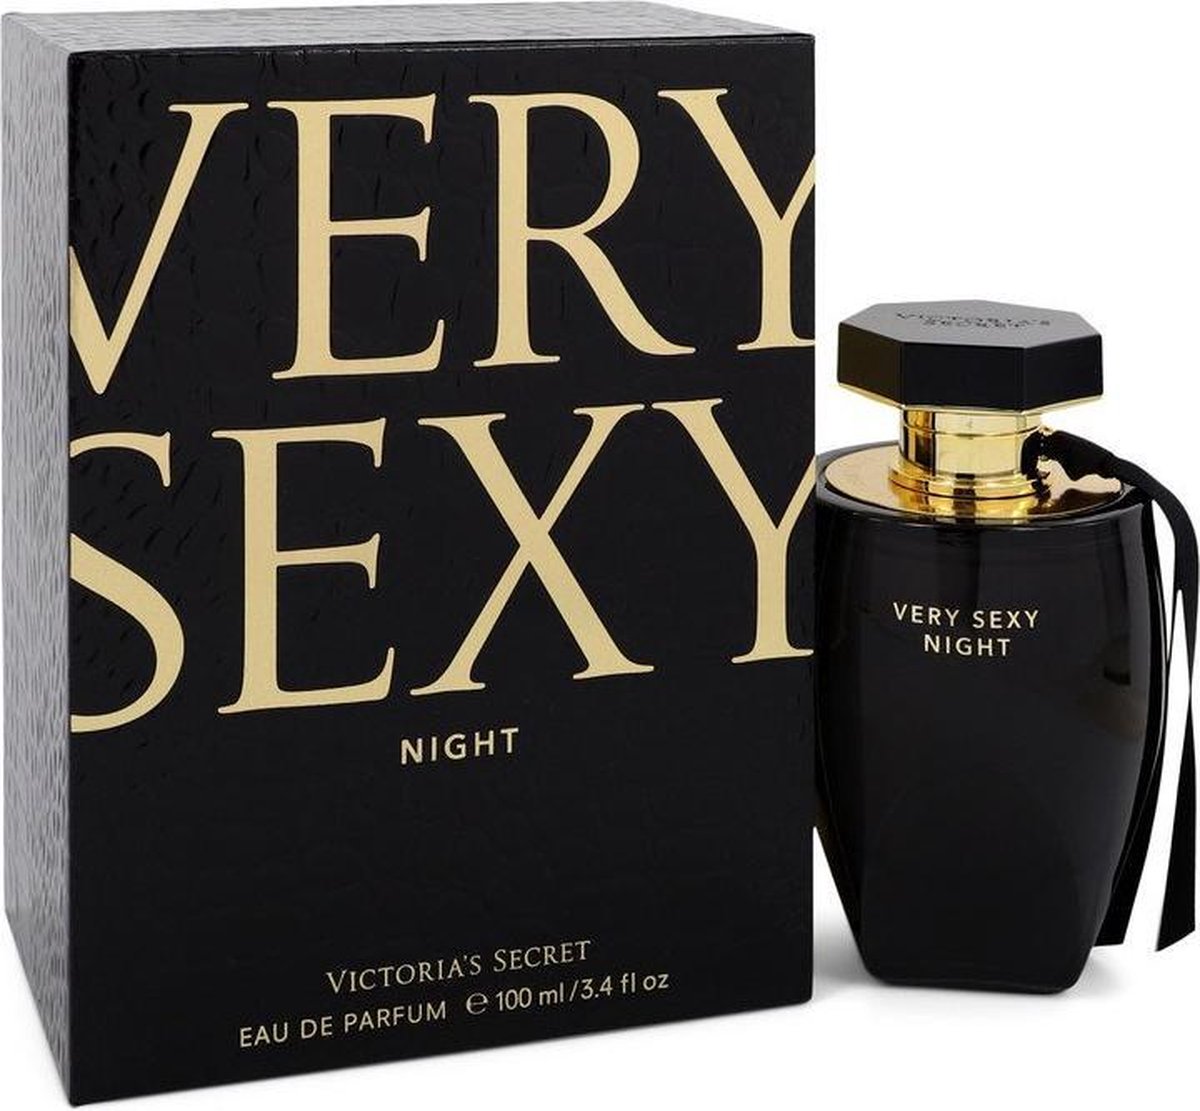 Victoria's Secret Very Sexy Night - Eau de parfum spray - 100 ml